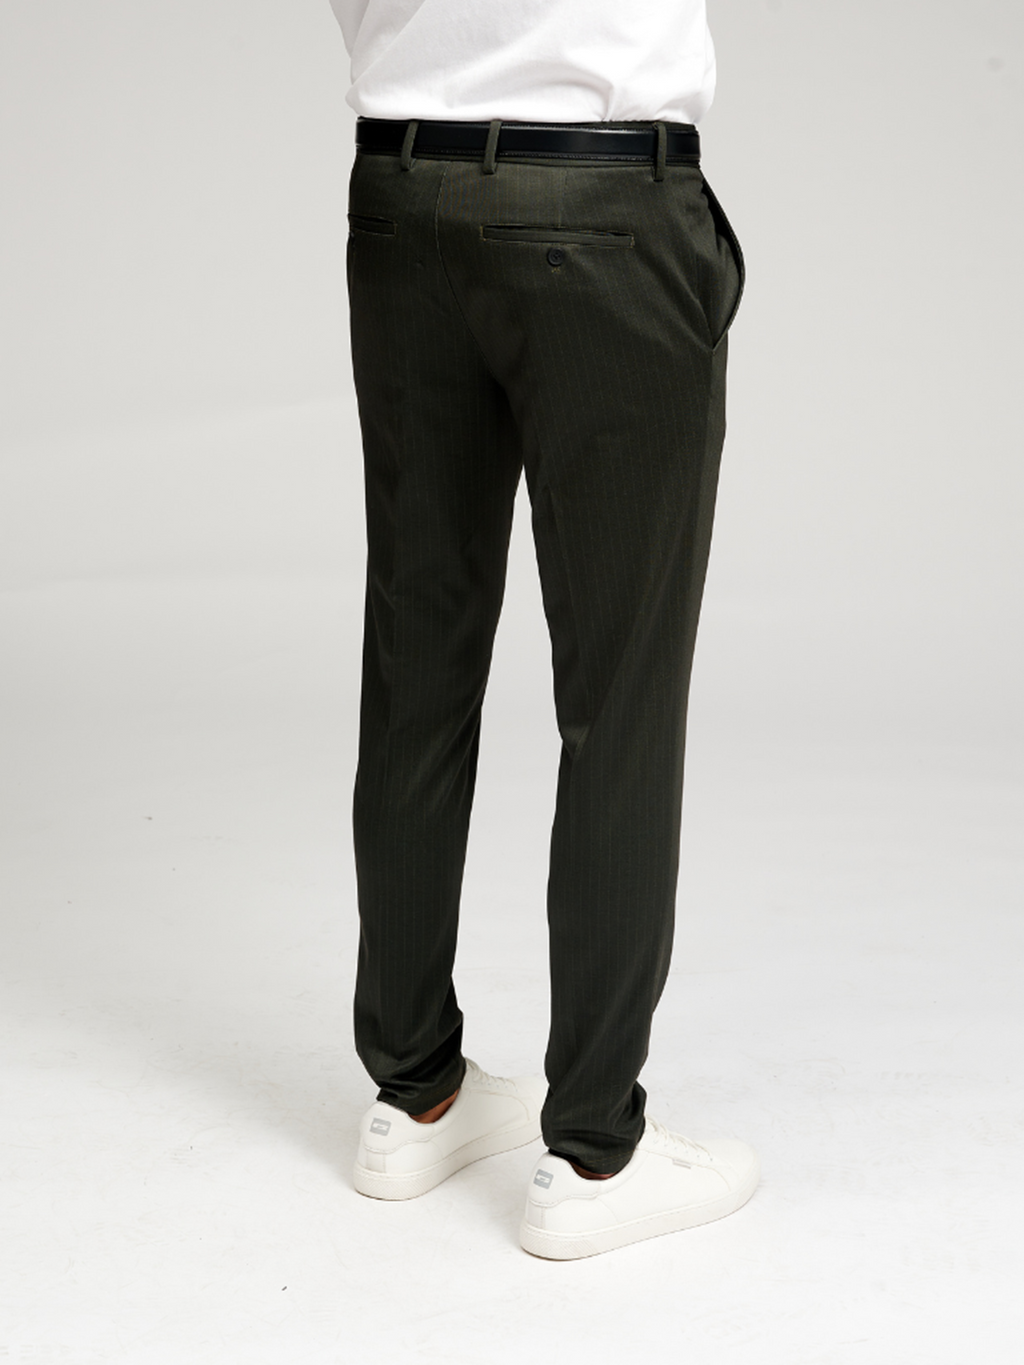 Performance Pants - Dark Green Striped (Limited)